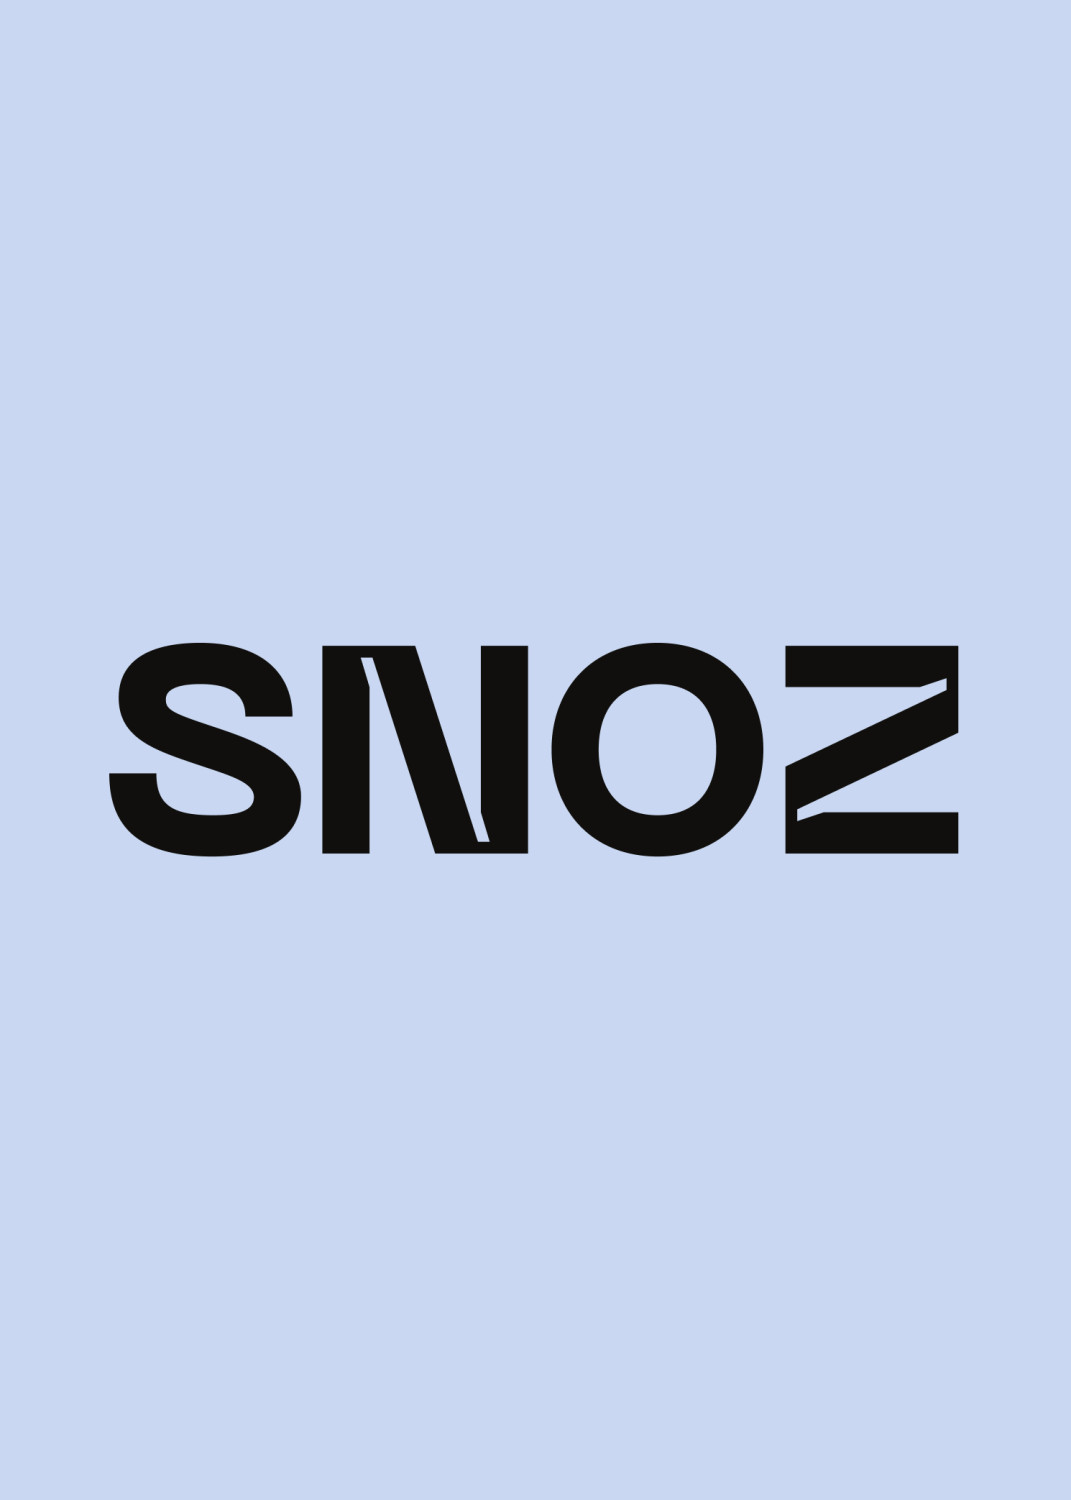 Snoz logo